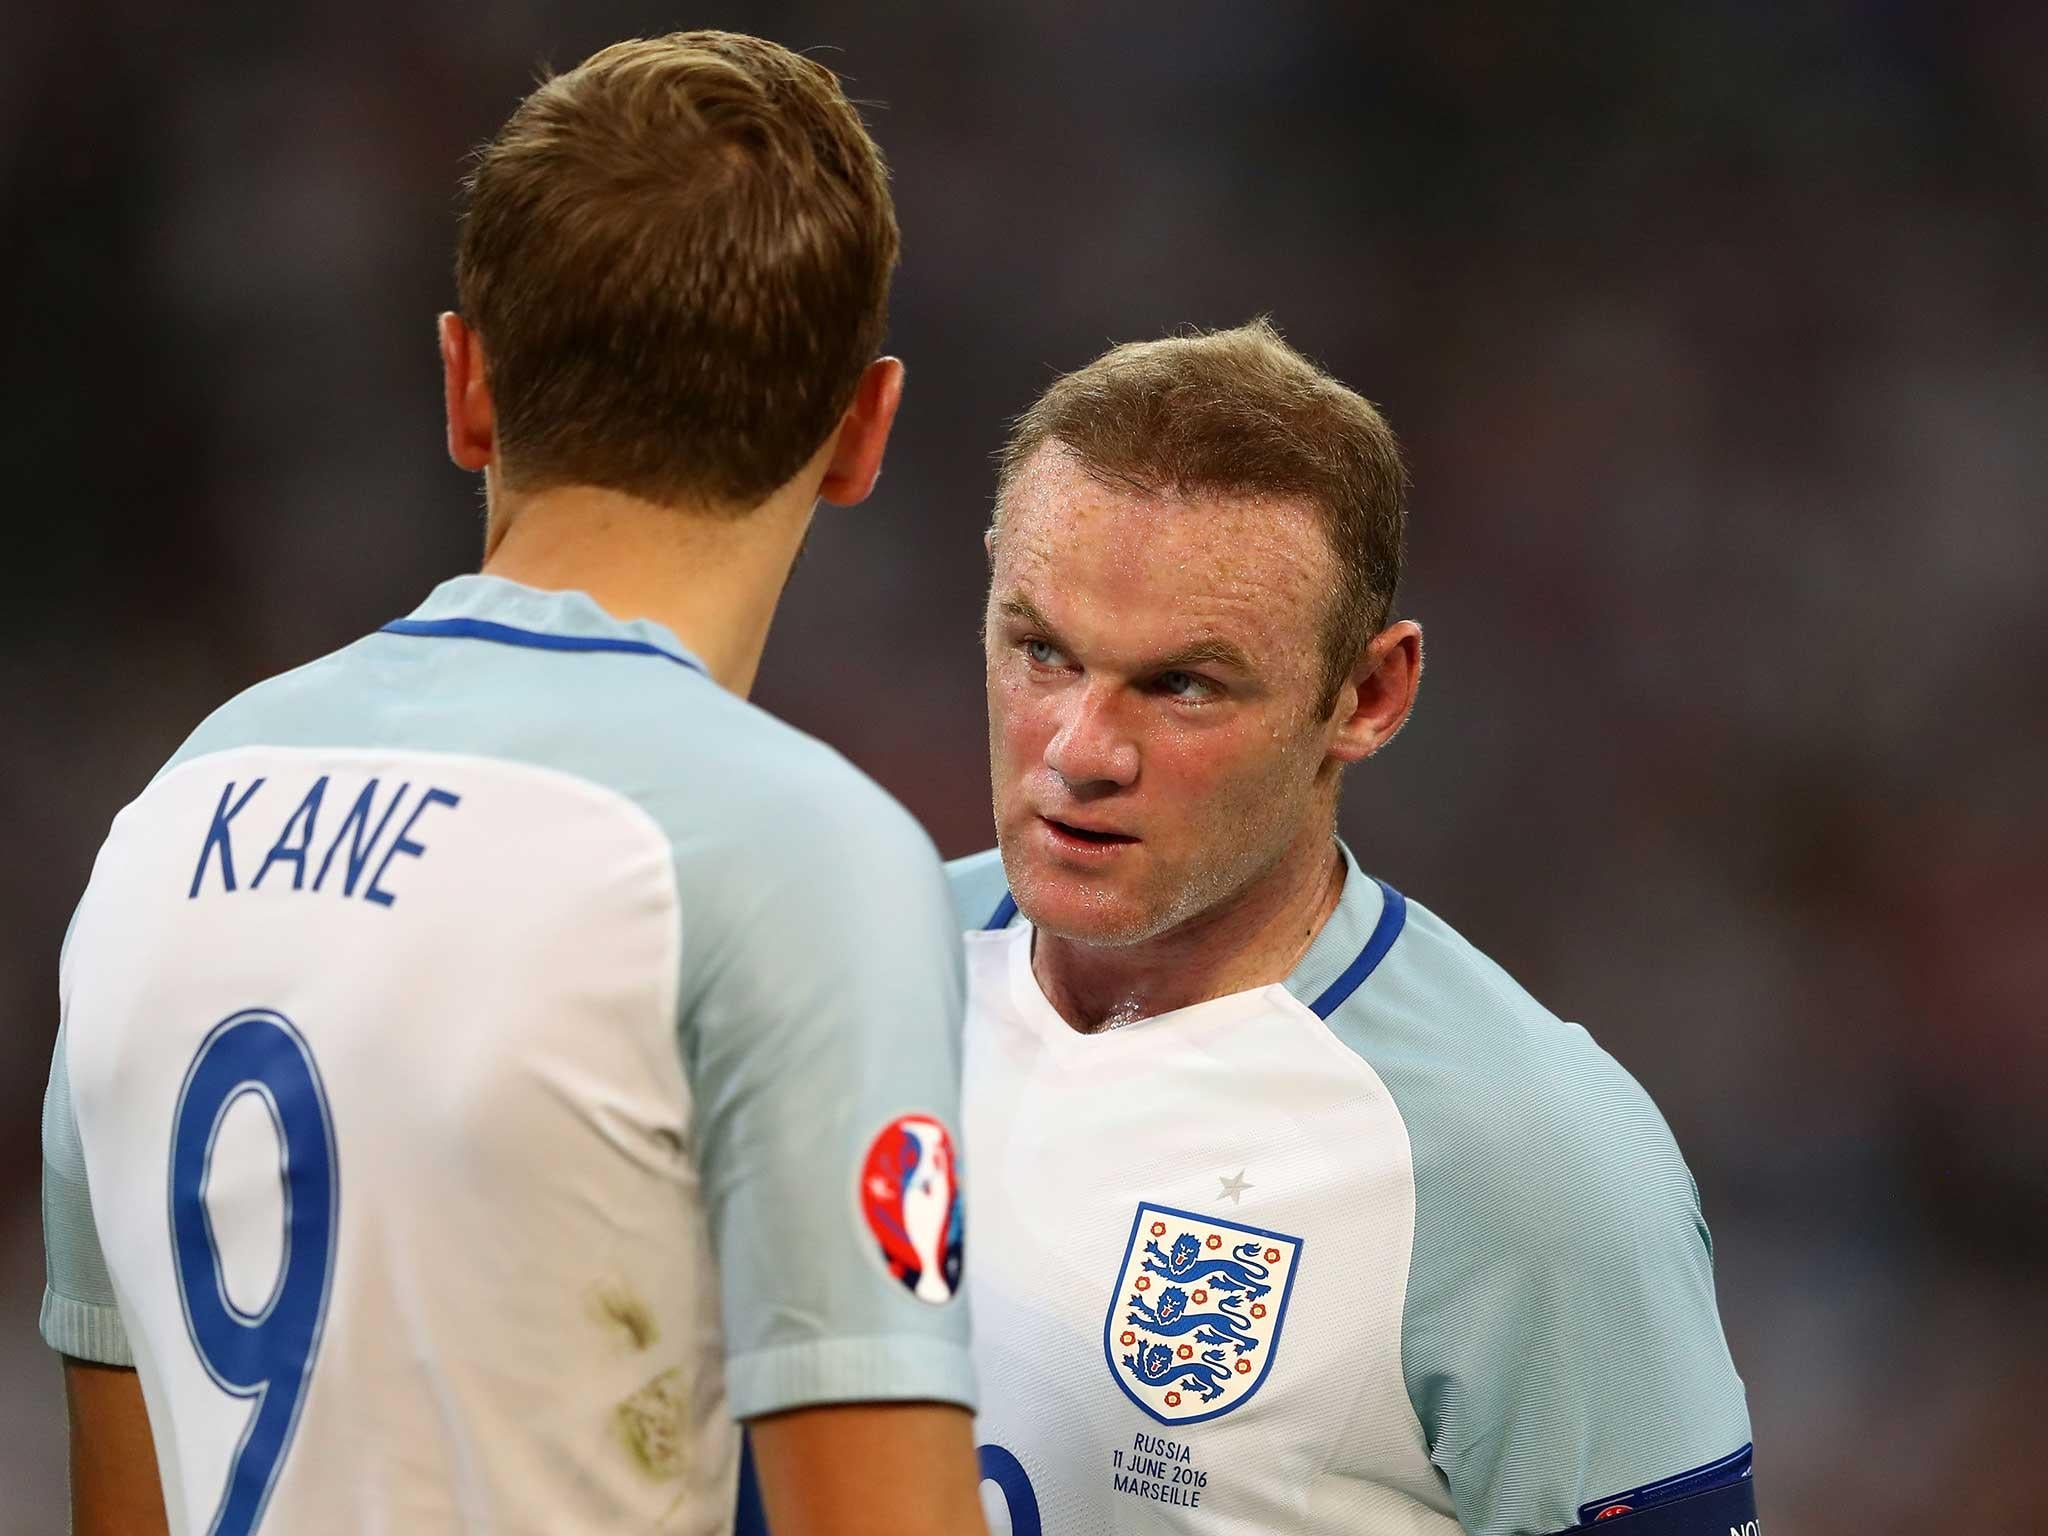 Wayne Rooney impressed in midfield for England